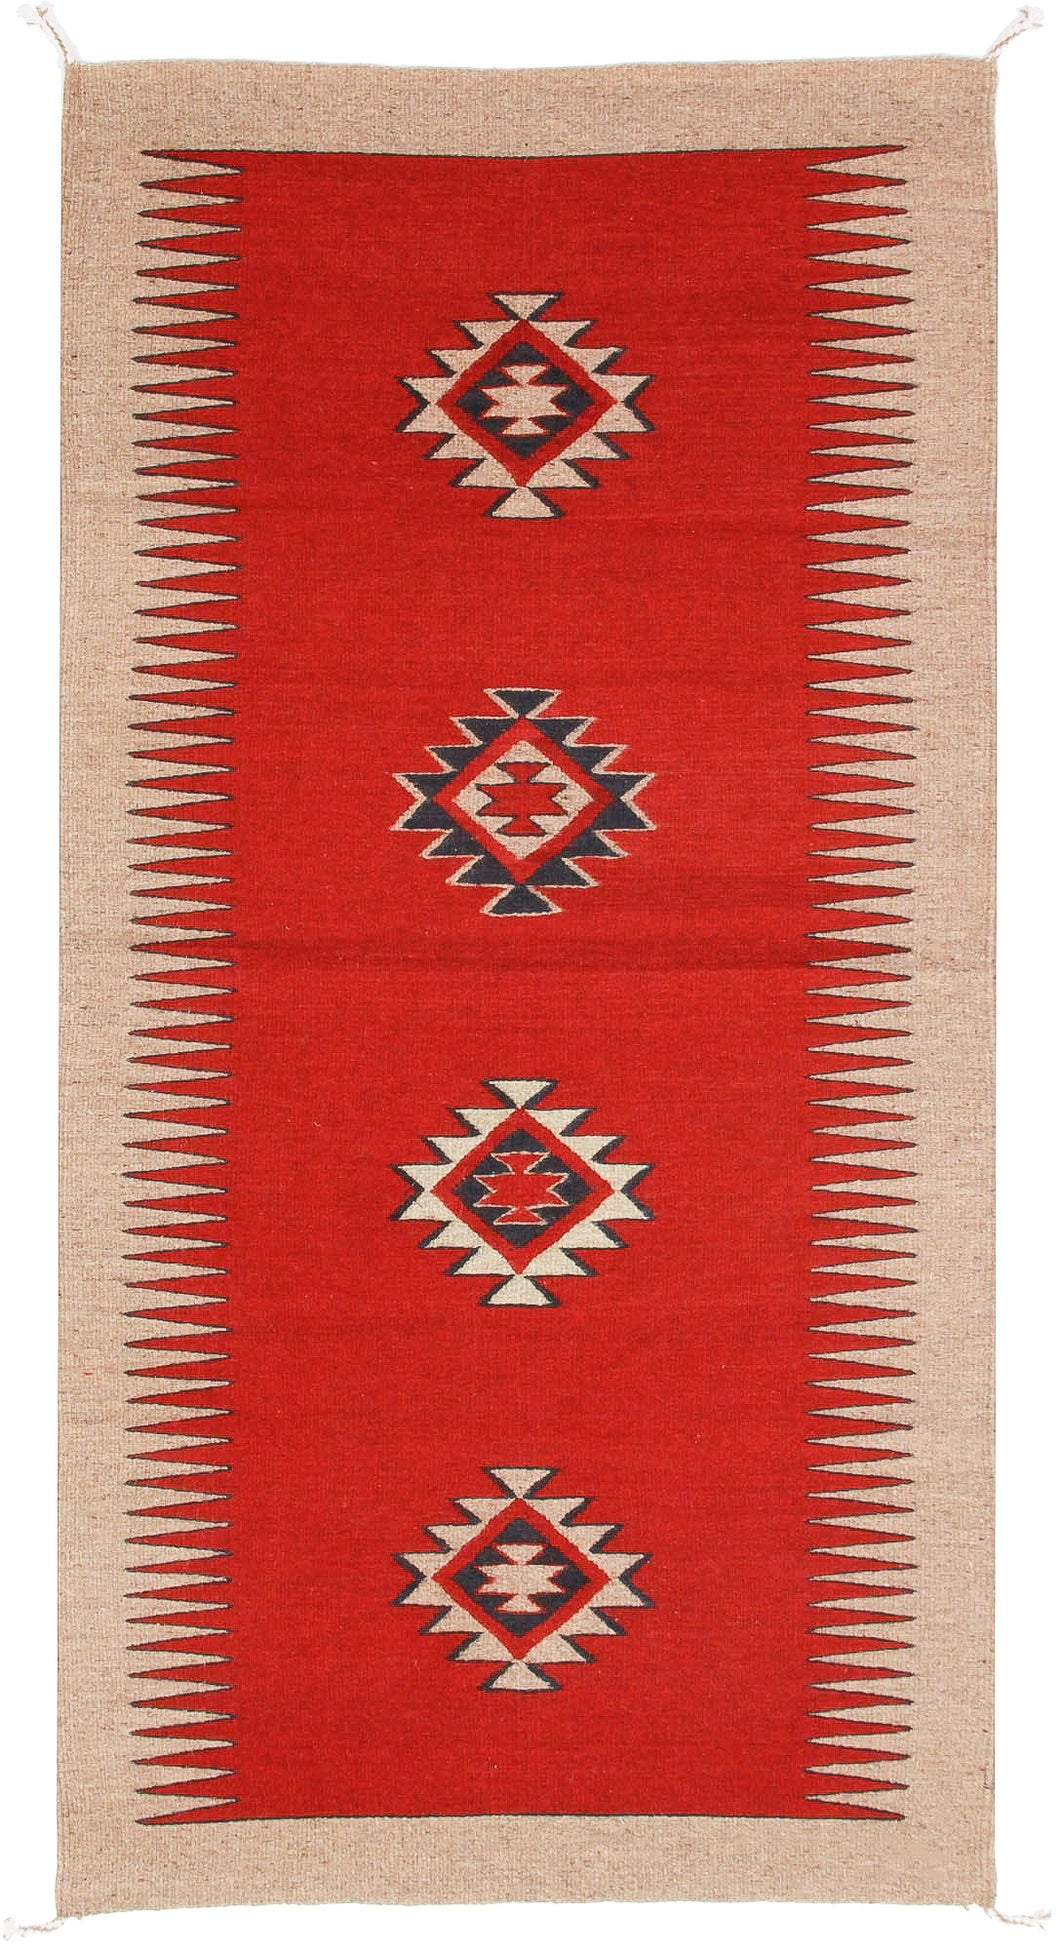 Handwoven Zapotec Indian Rug - Espiritu Wool Oaxacan Textile